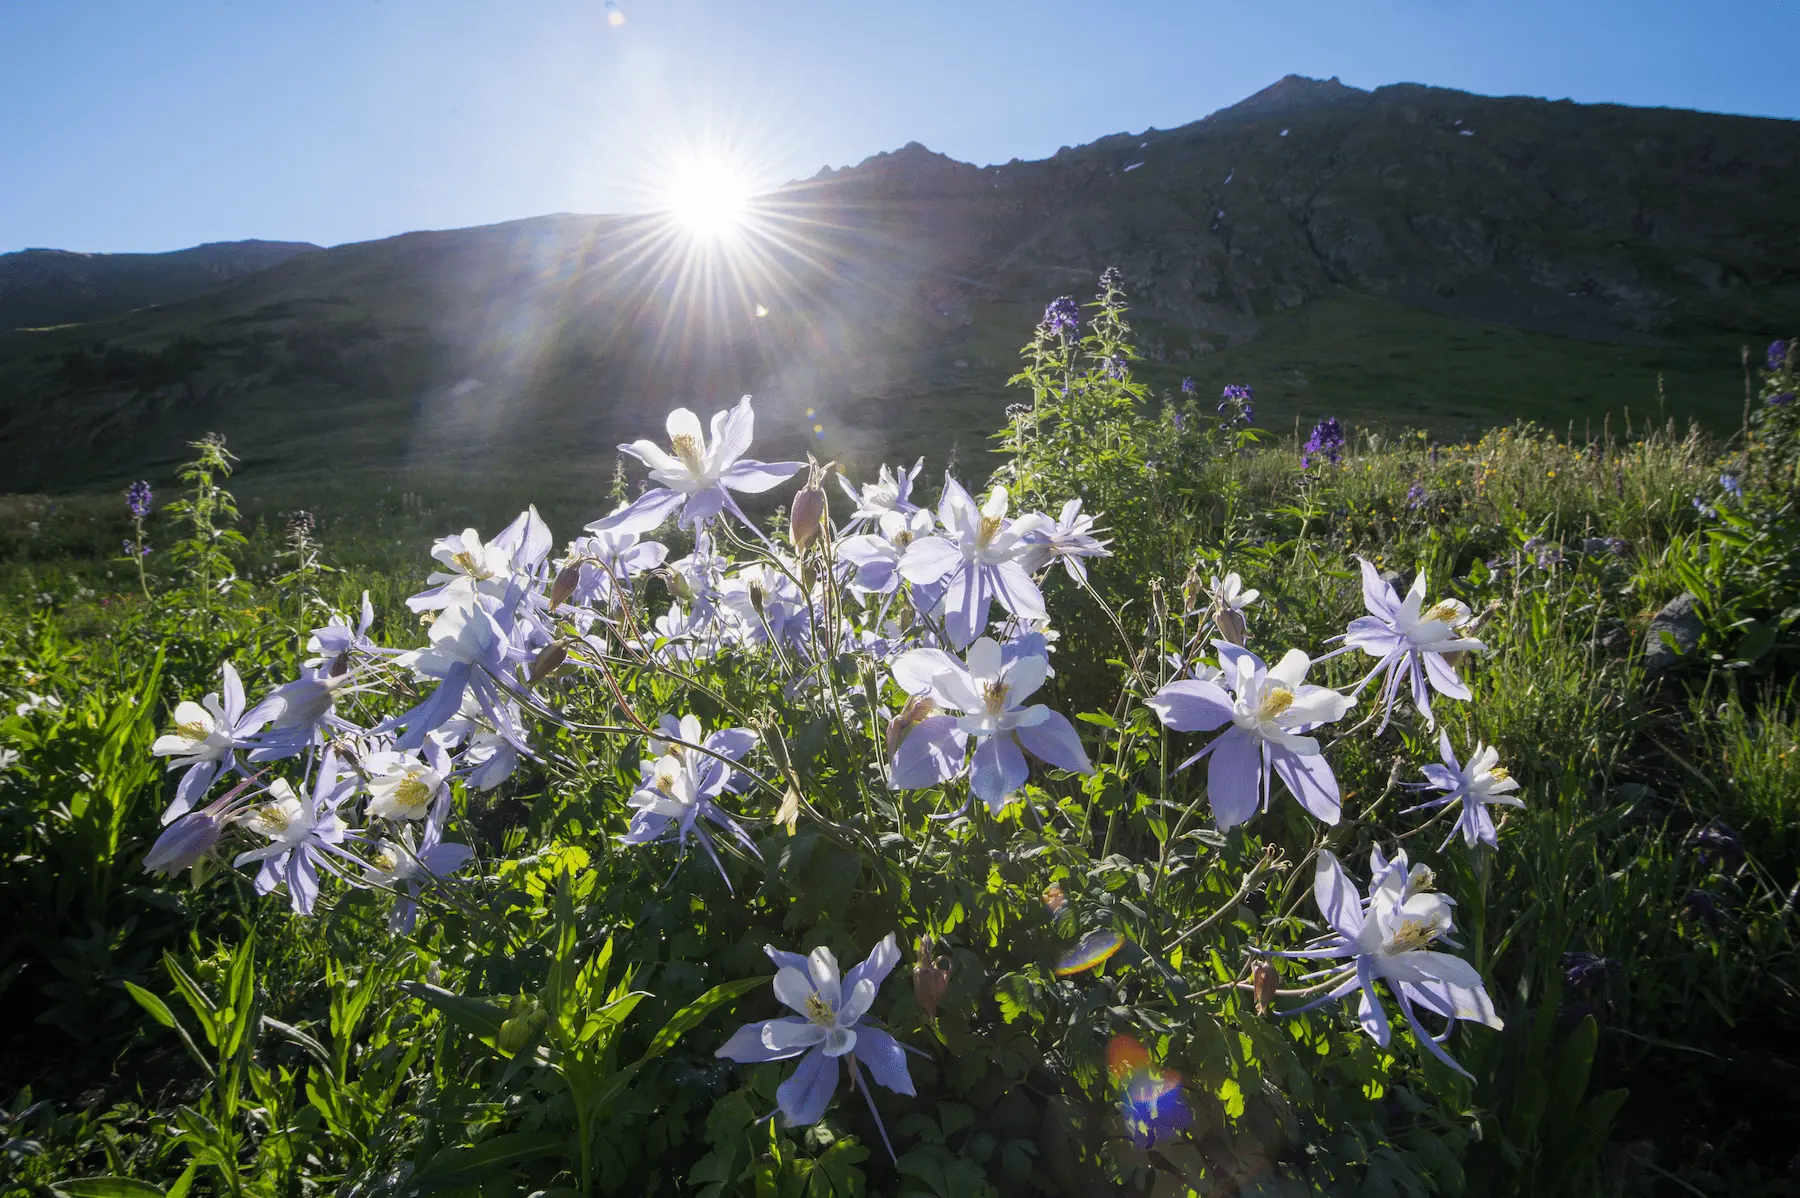 Colorado mountains and
        wildflowers